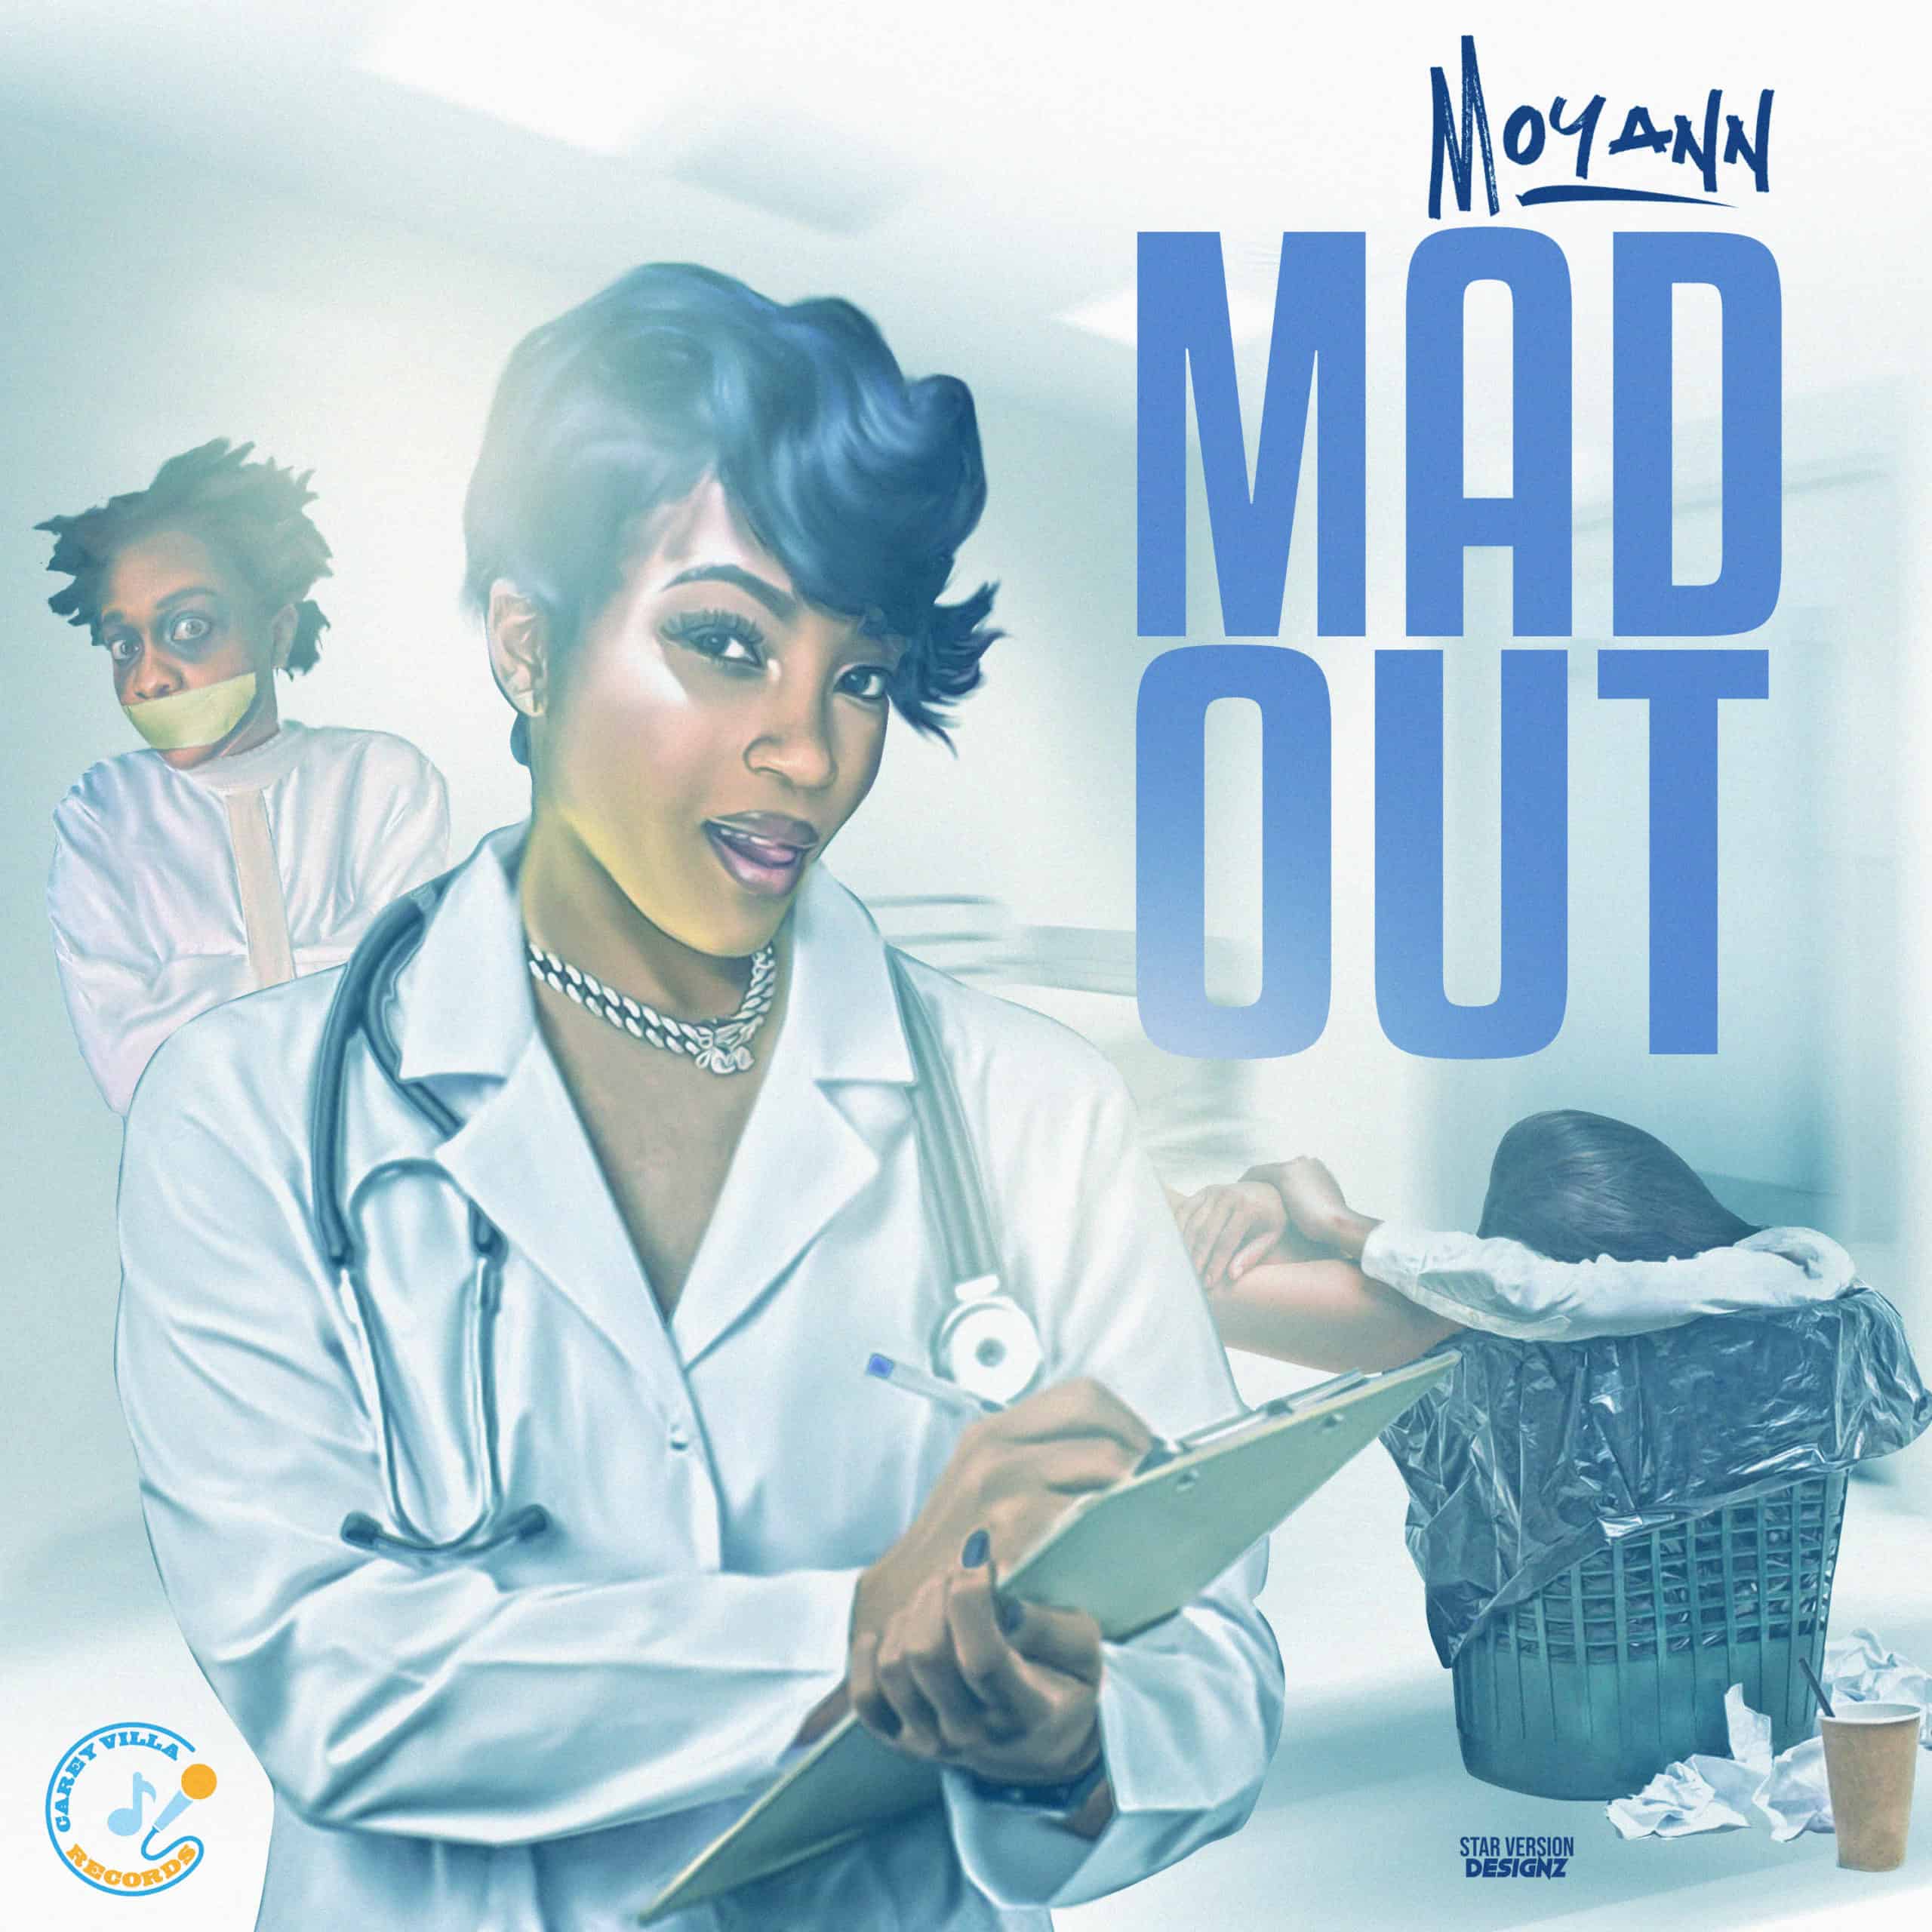 Moyann - Mad Out - Carey Villa Records